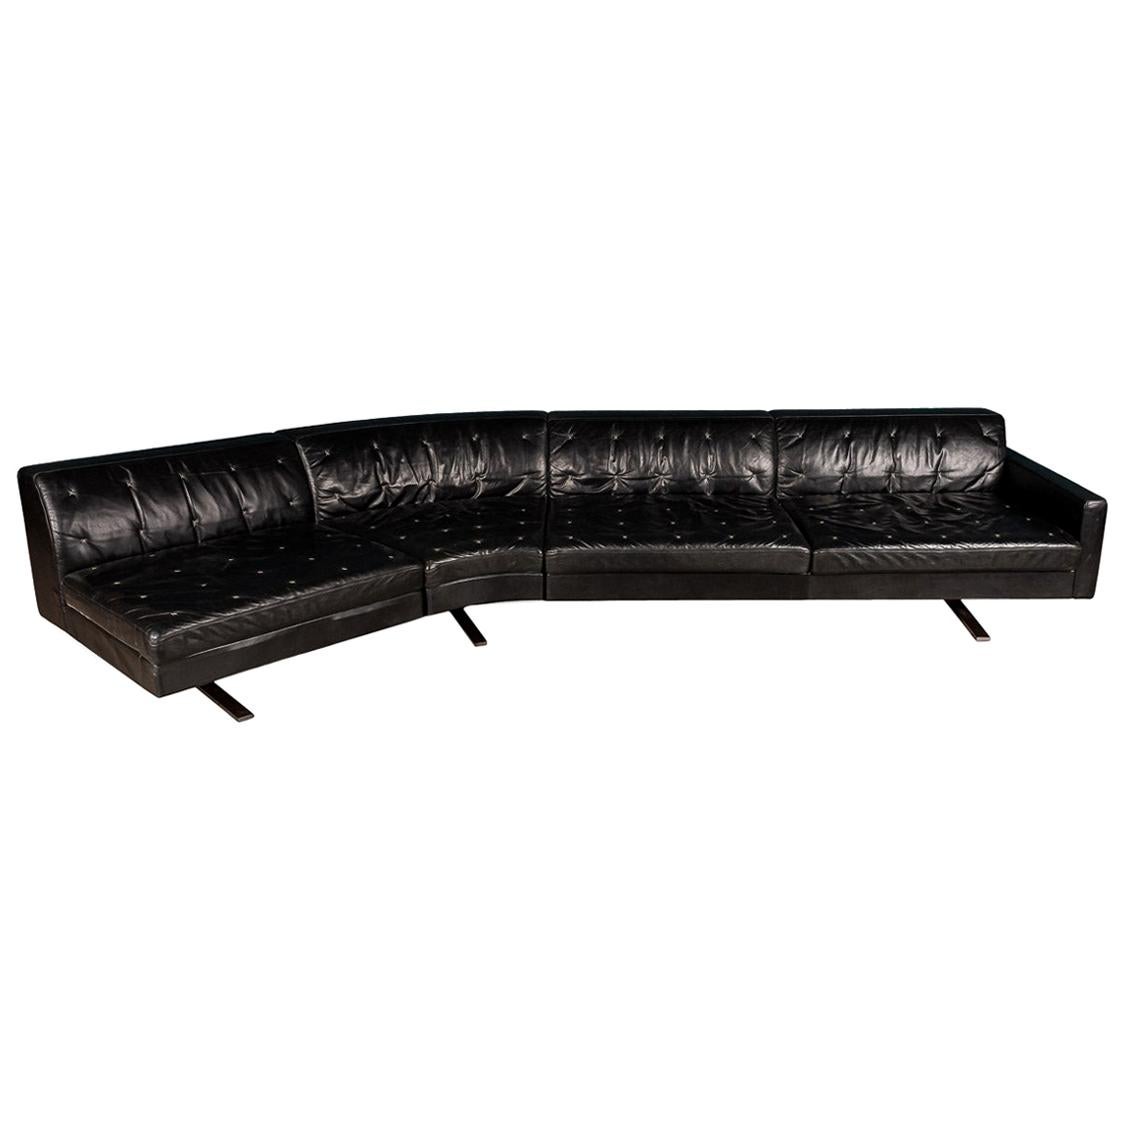 Superb 21st Century Italian Three-Seat Leather Sofa By Poltrona Frau